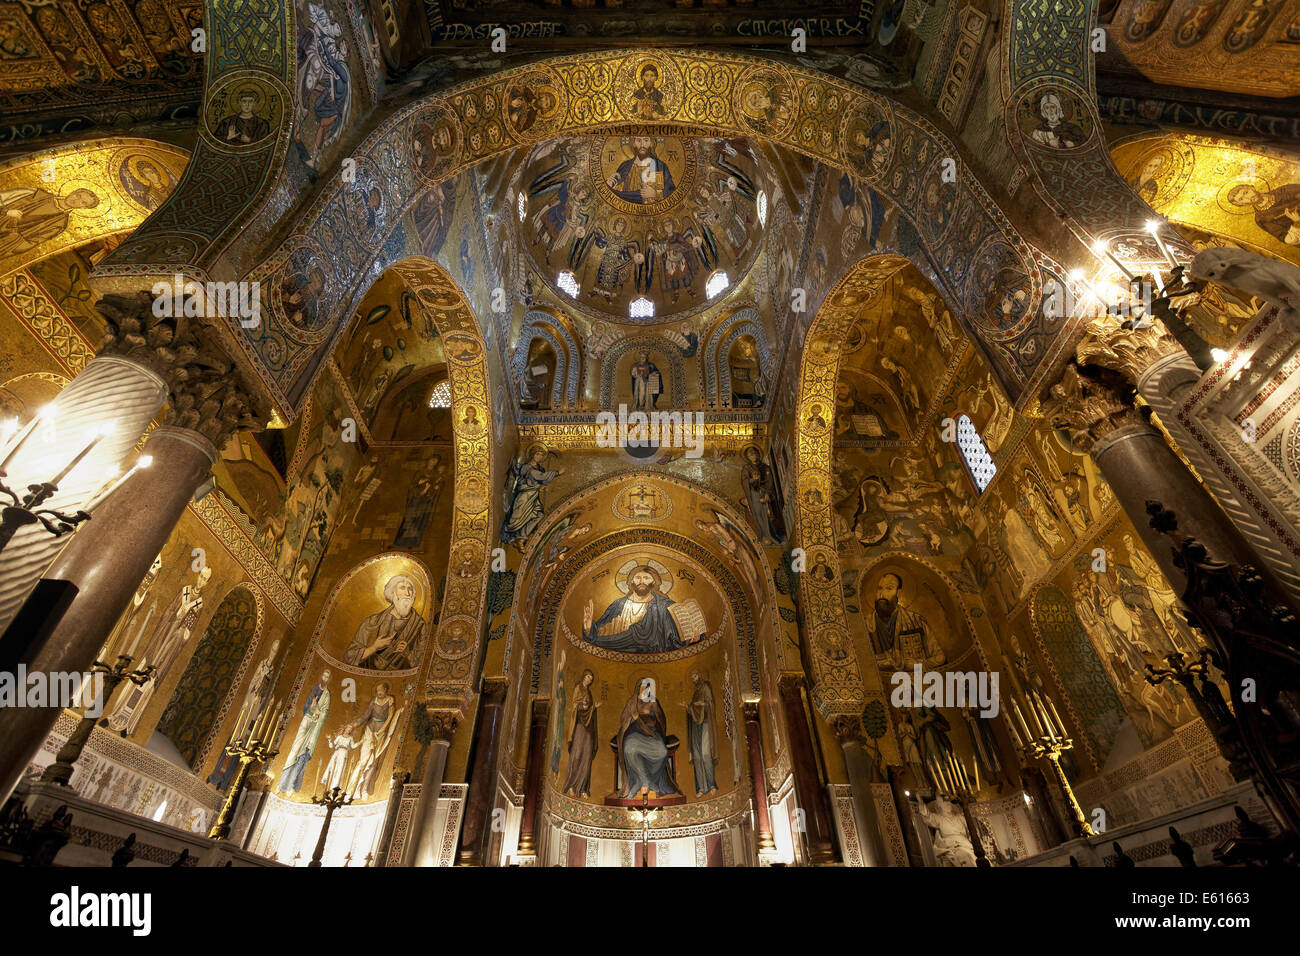 Magnificent Byzantine mosaics, Cappella Palatina, Palatine Chapel, Palazzo dei Norman or Norman Palace, Palermo, Sicily, Italy Stock Photo